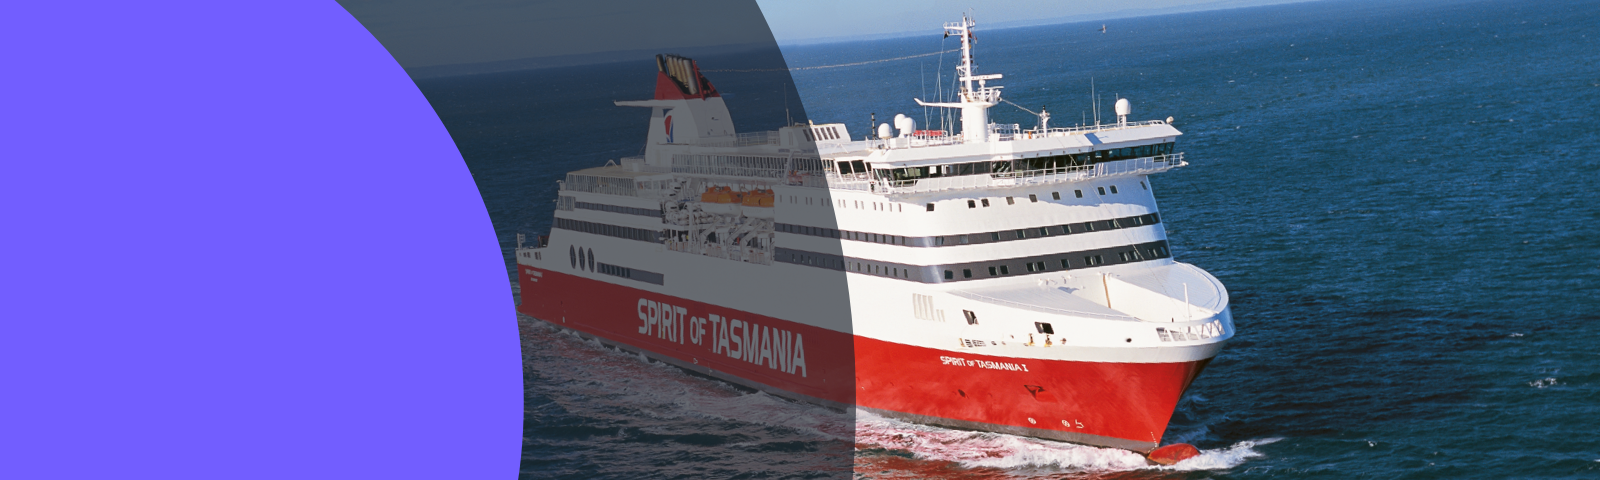 Spirit-of-Tasmania3-1600x480